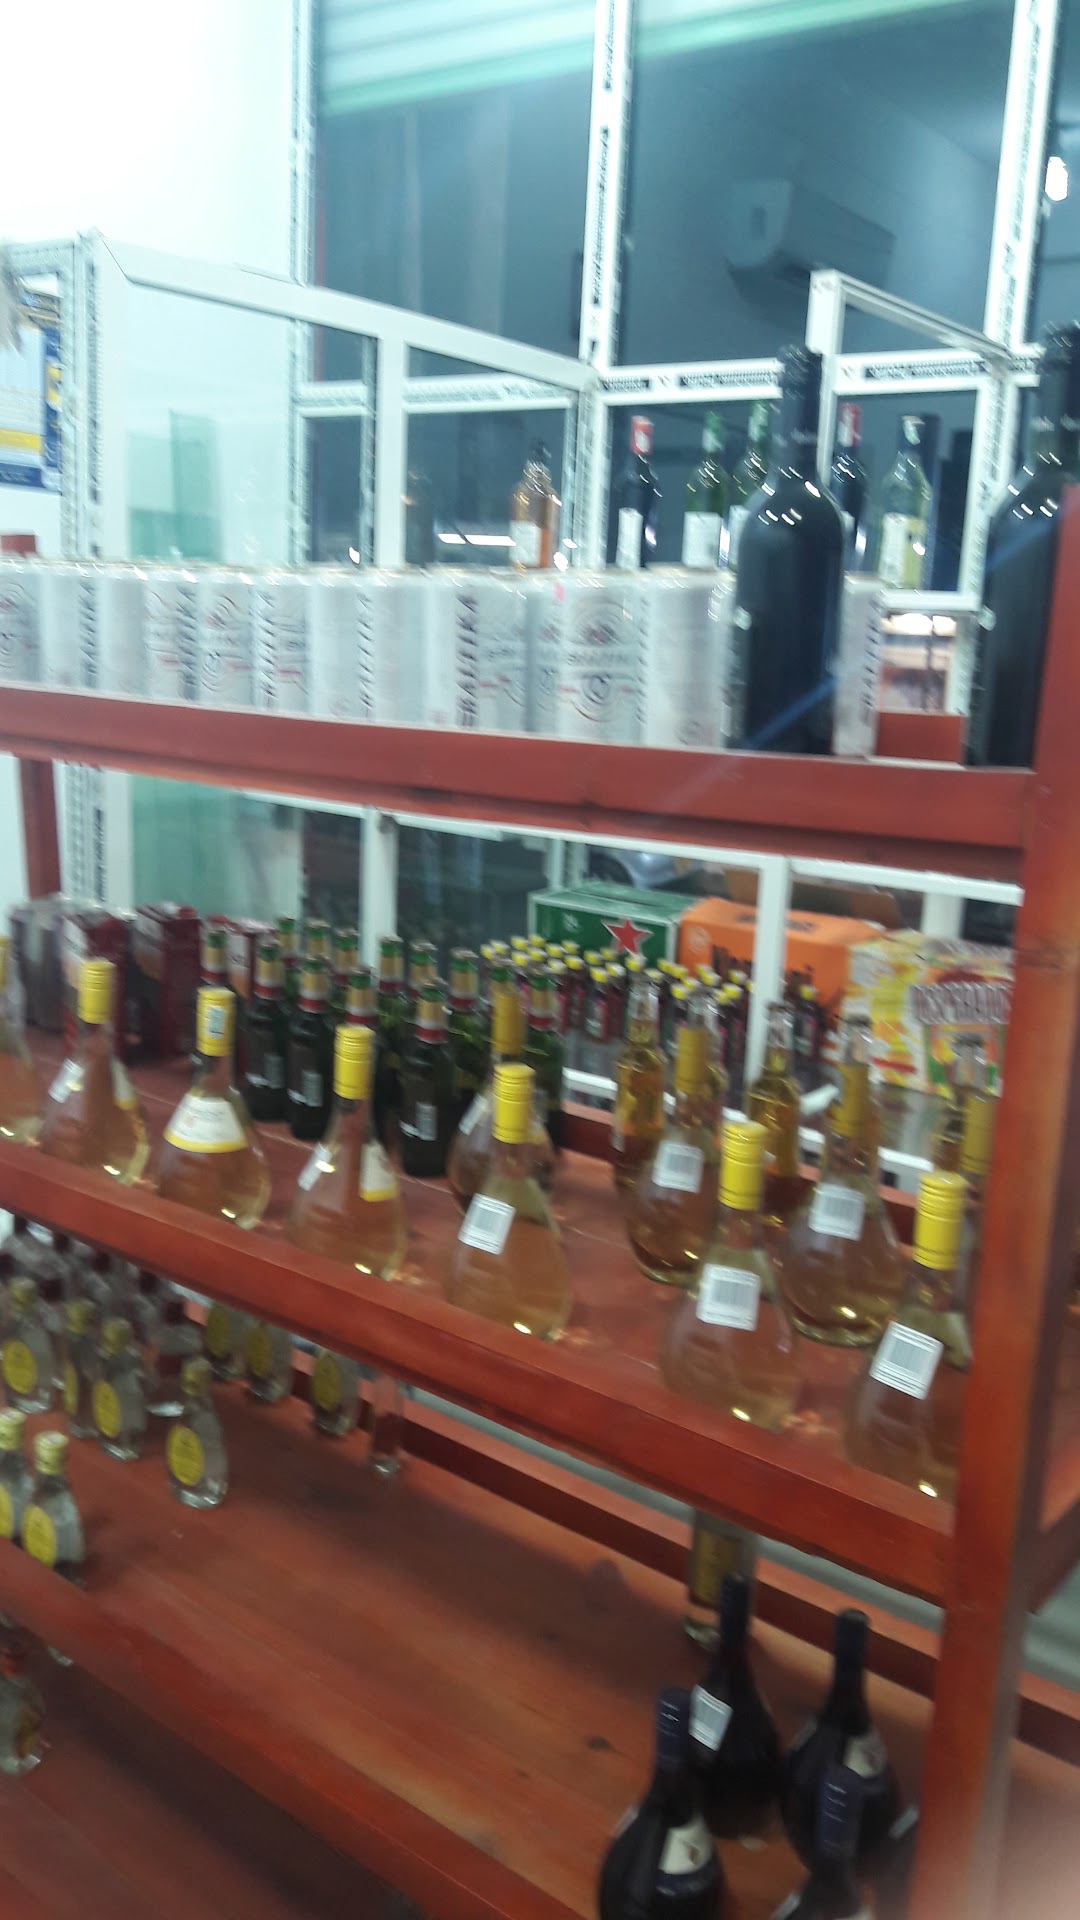 Uleja Liquor Store